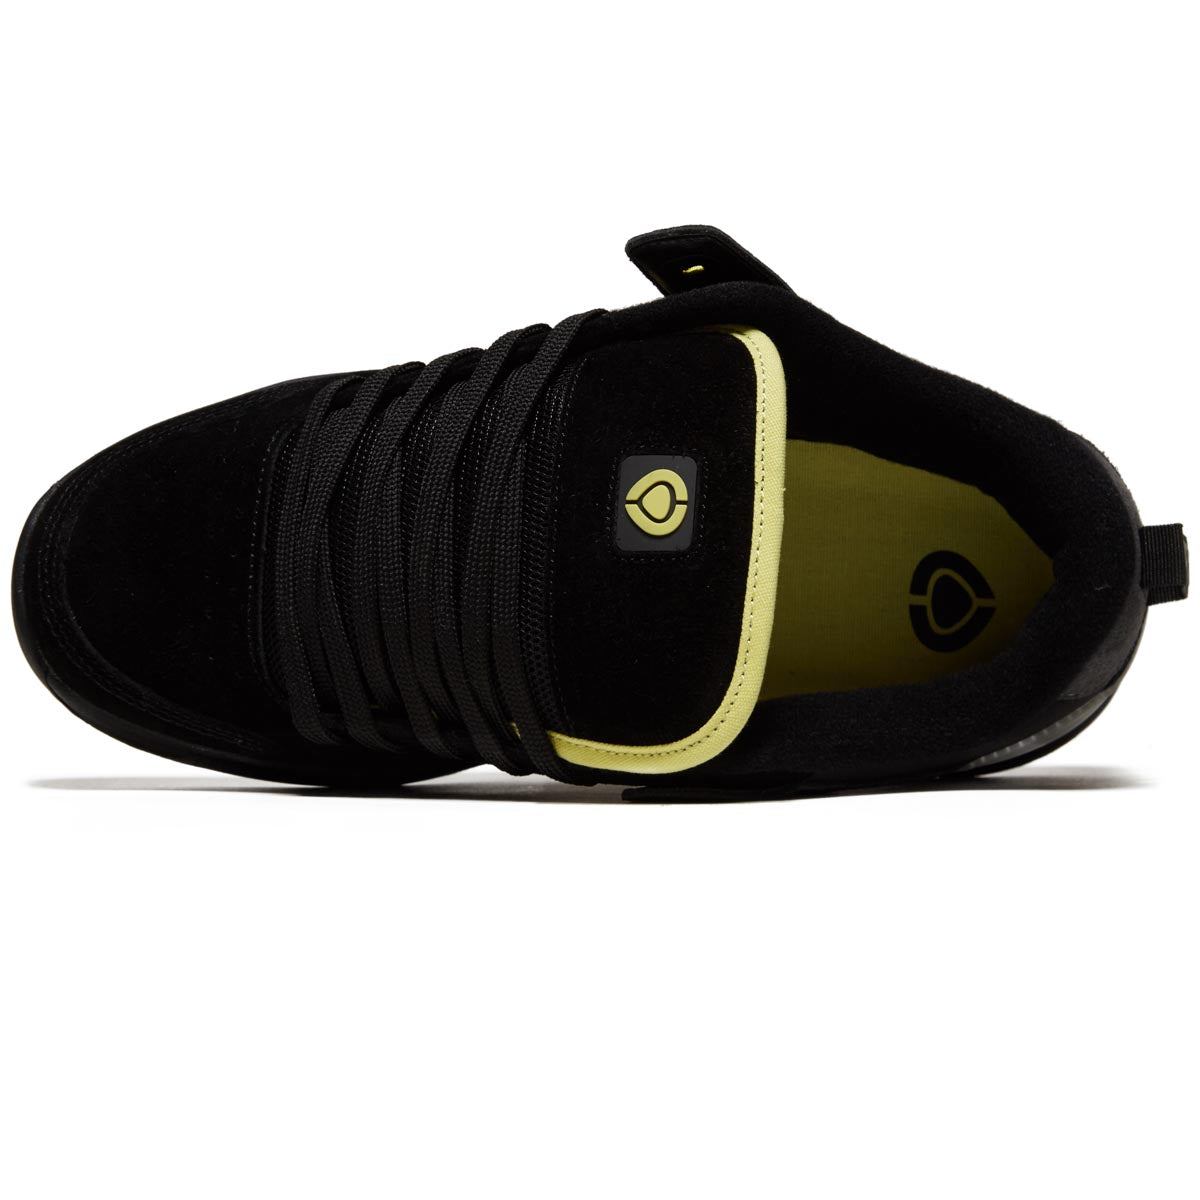 C1rca Tave TT Shoes - Black/Yellow image 3